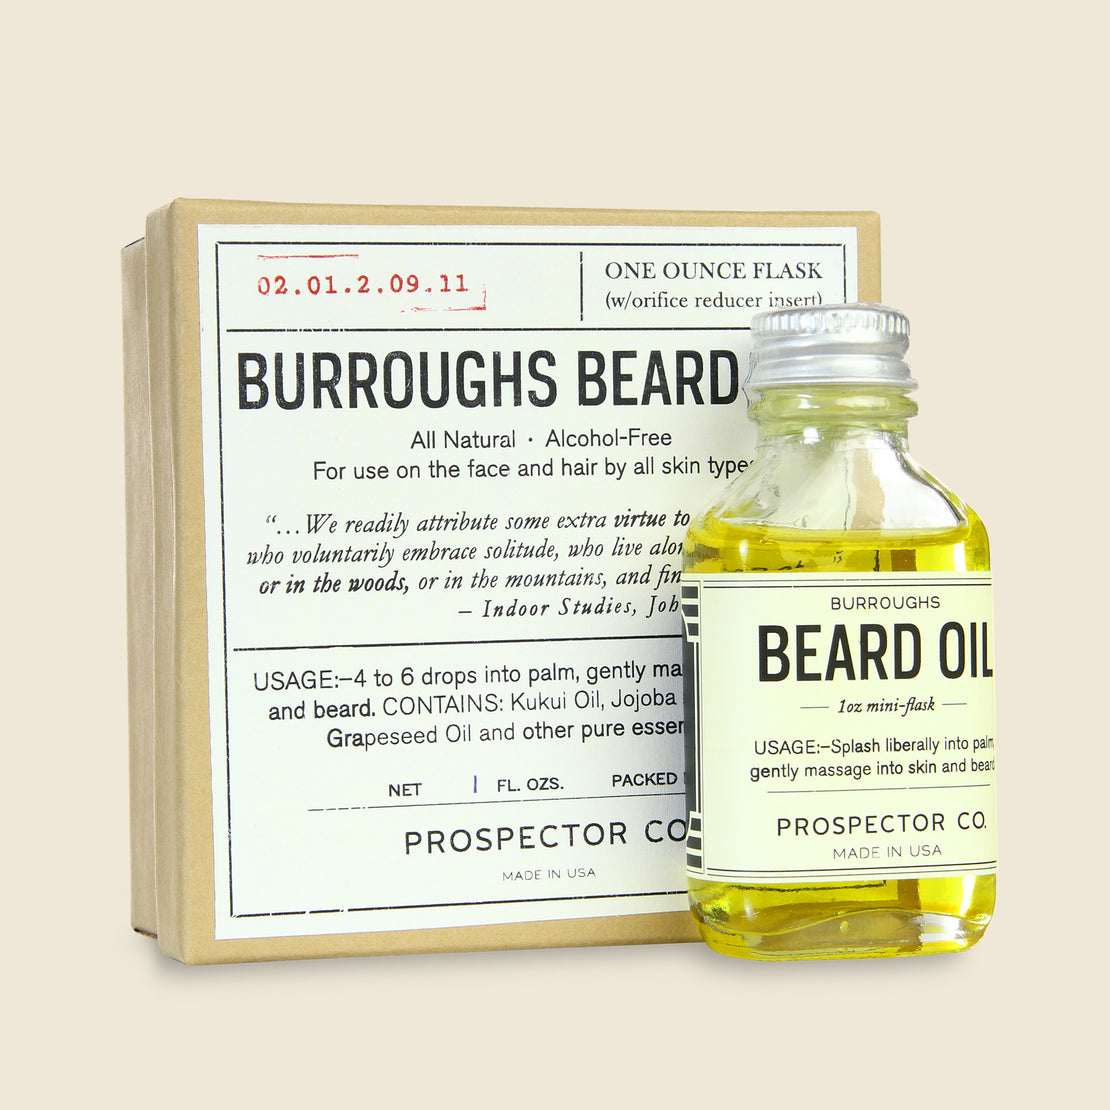 Burroughs Beard Oil - Prospector Co. - STAG Provisions - Home - Chemist - Skin Care